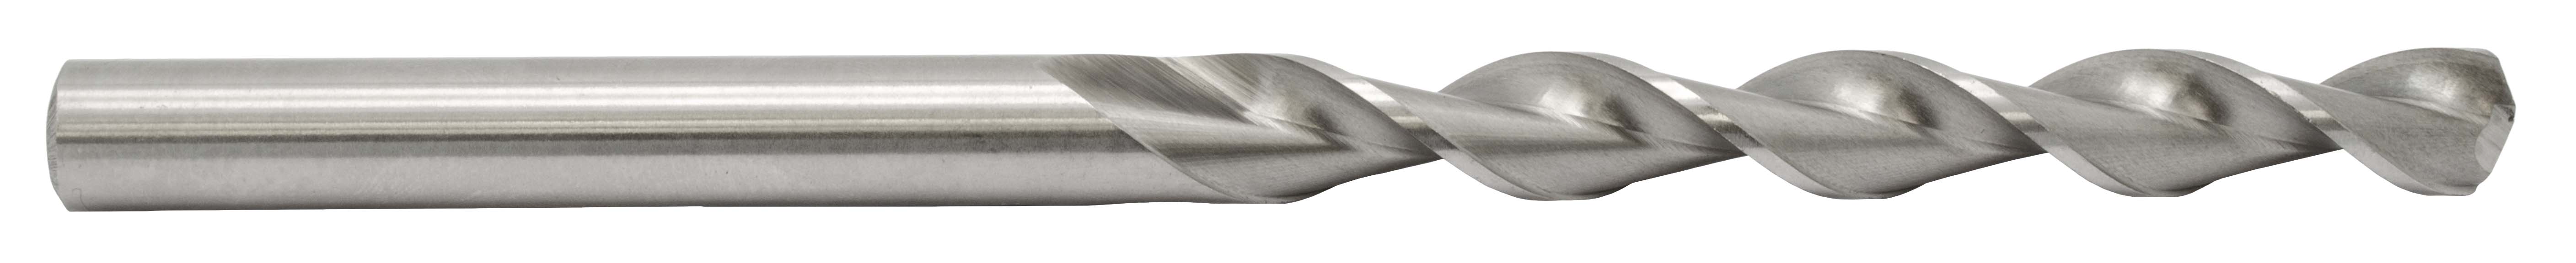 Parabolic Flute Taper Length Drills High Speed Steel